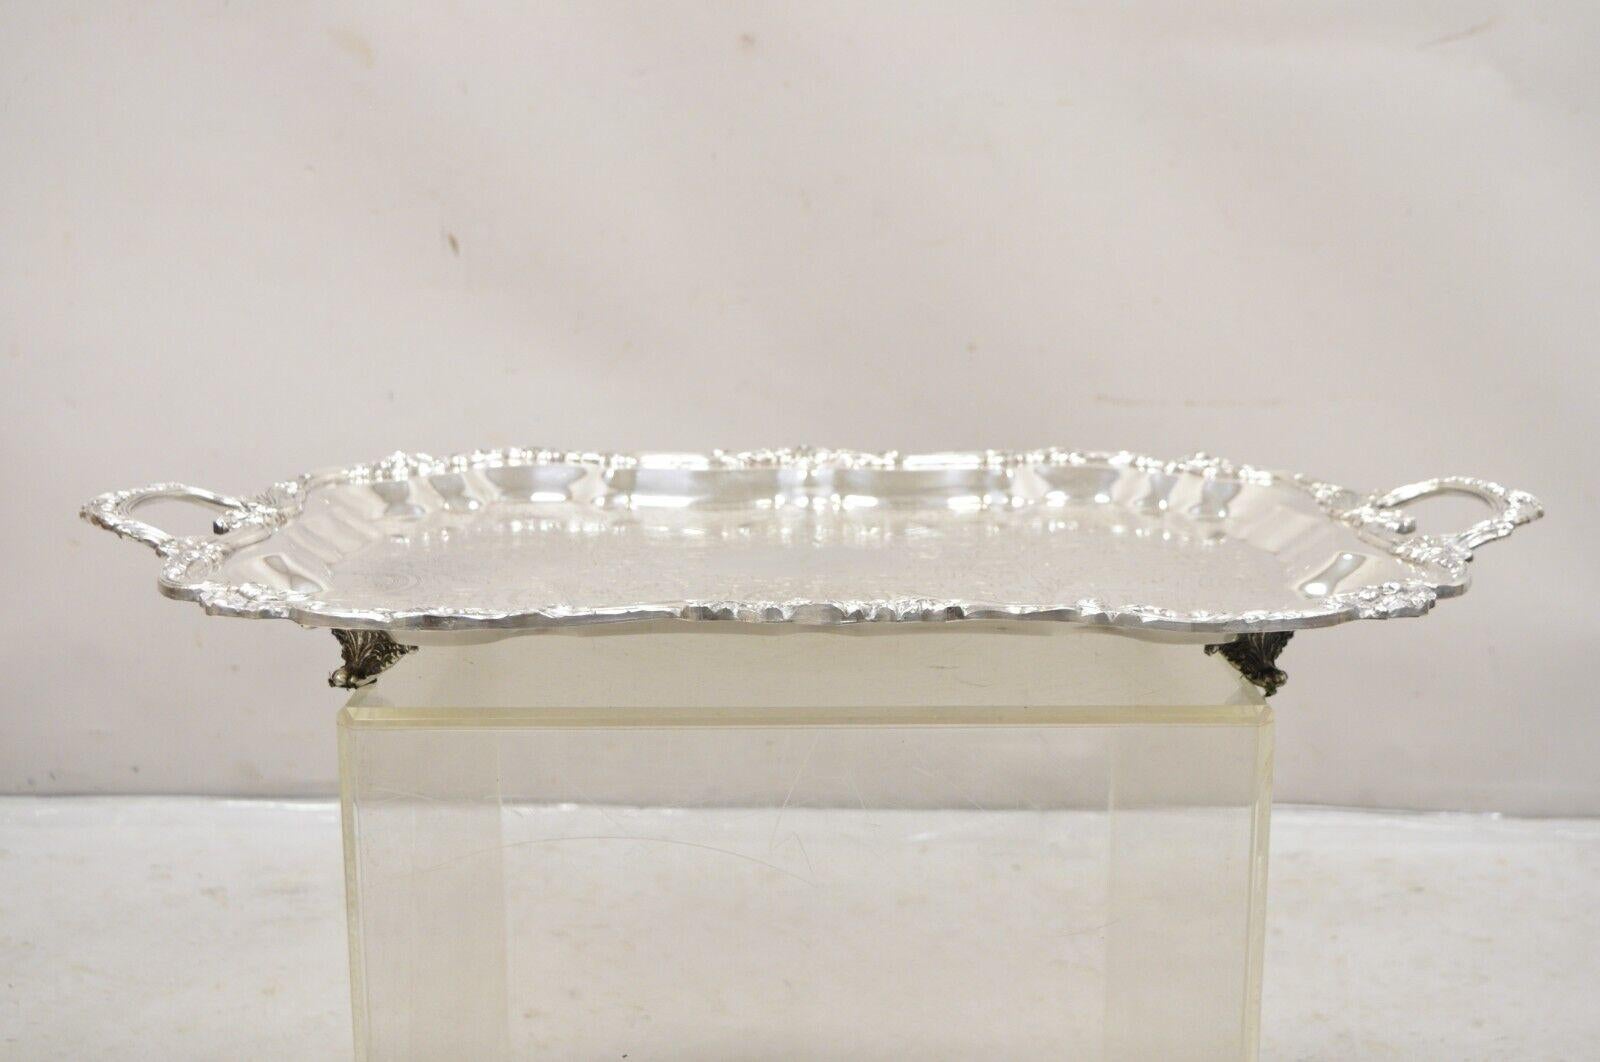 sheridan silver plated tray